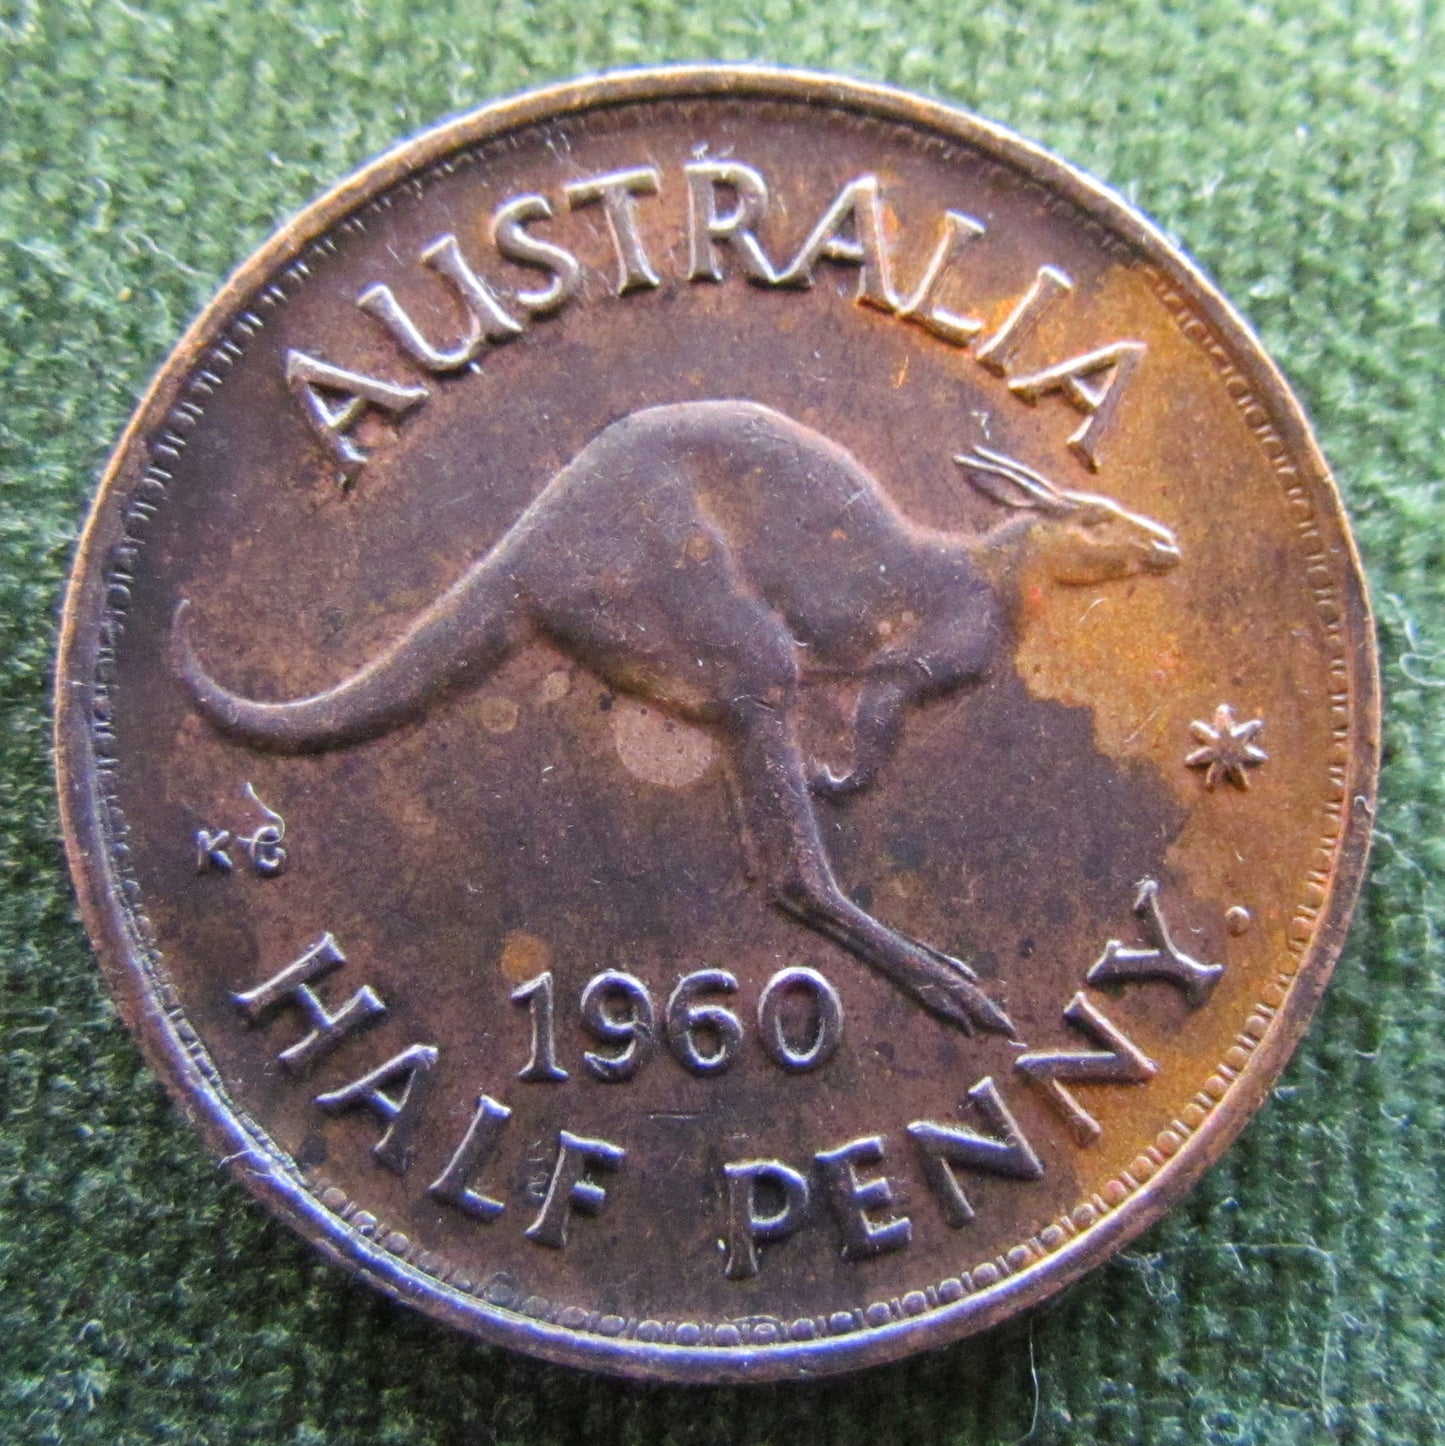 Australian 1960 1/2d Half Penny Queen Elizabeth II Coin - Variety Lamination Error